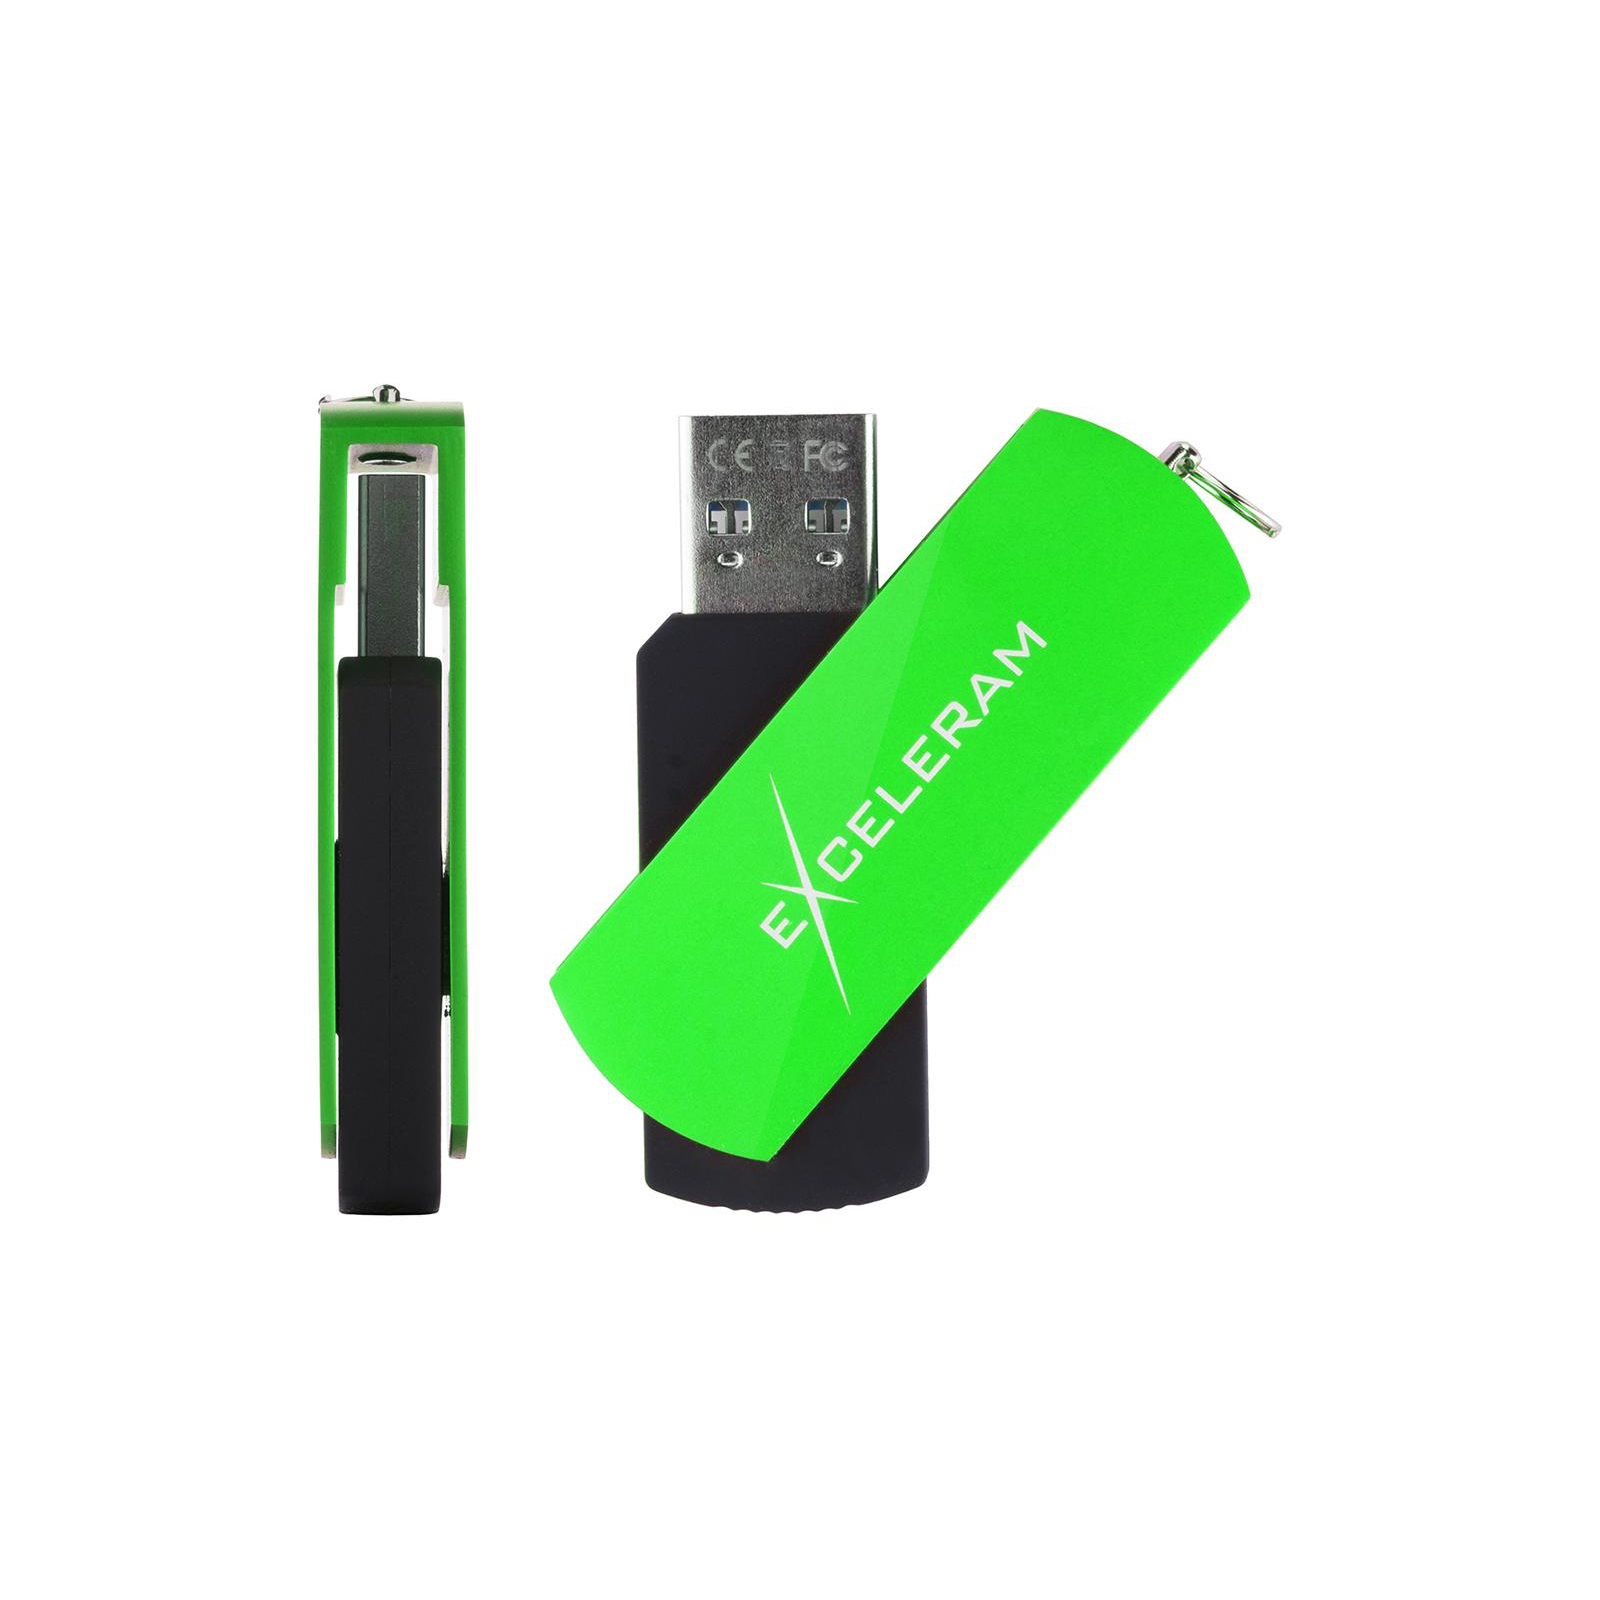 USB флеш накопитель eXceleram 32GB P2 Series Brown/Black USB 2.0 (EXP2U2BRB32) изображение 4